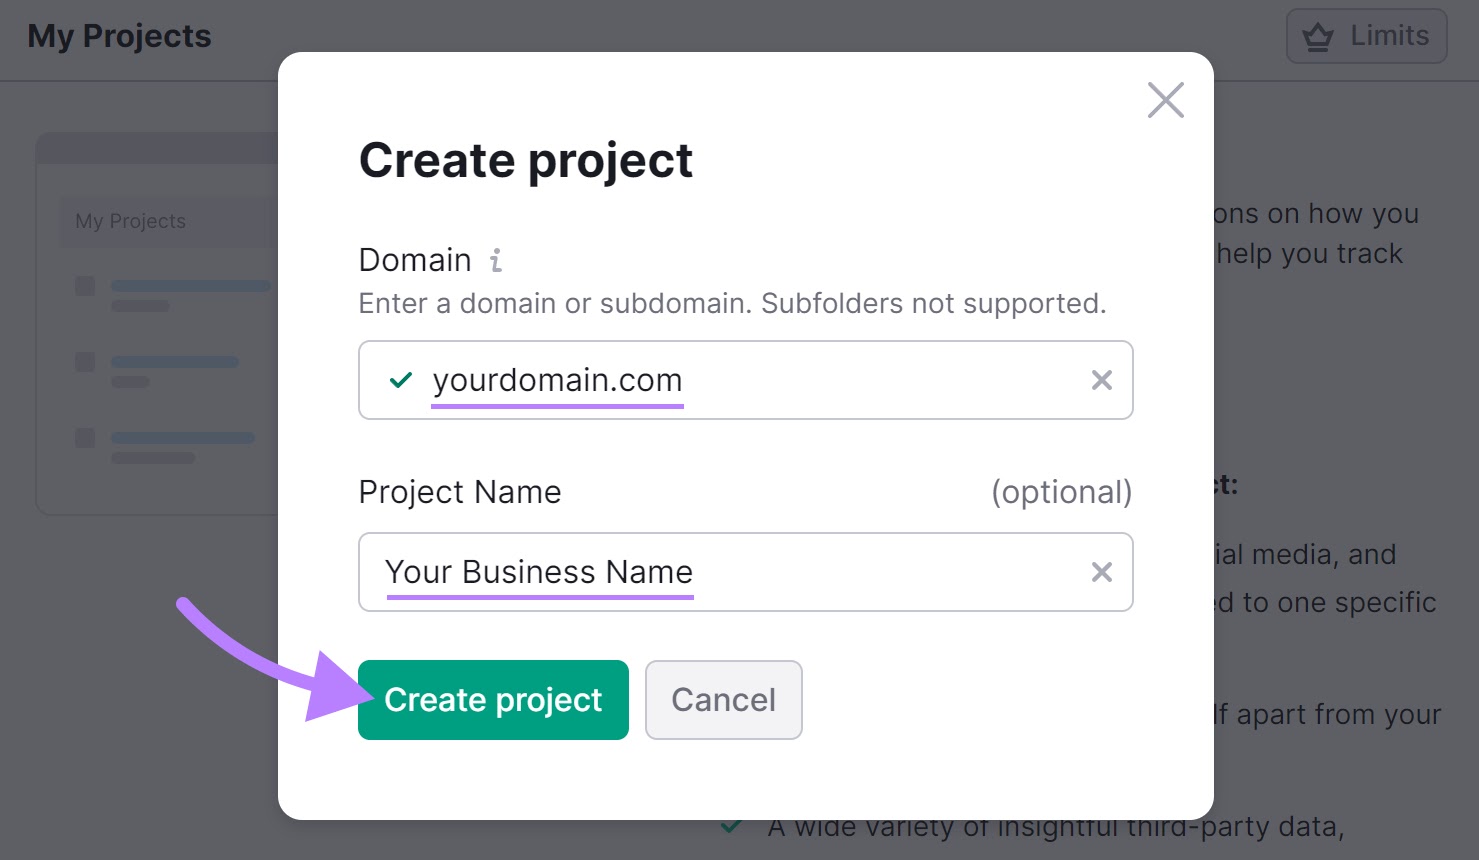 "Create project" pop-up window